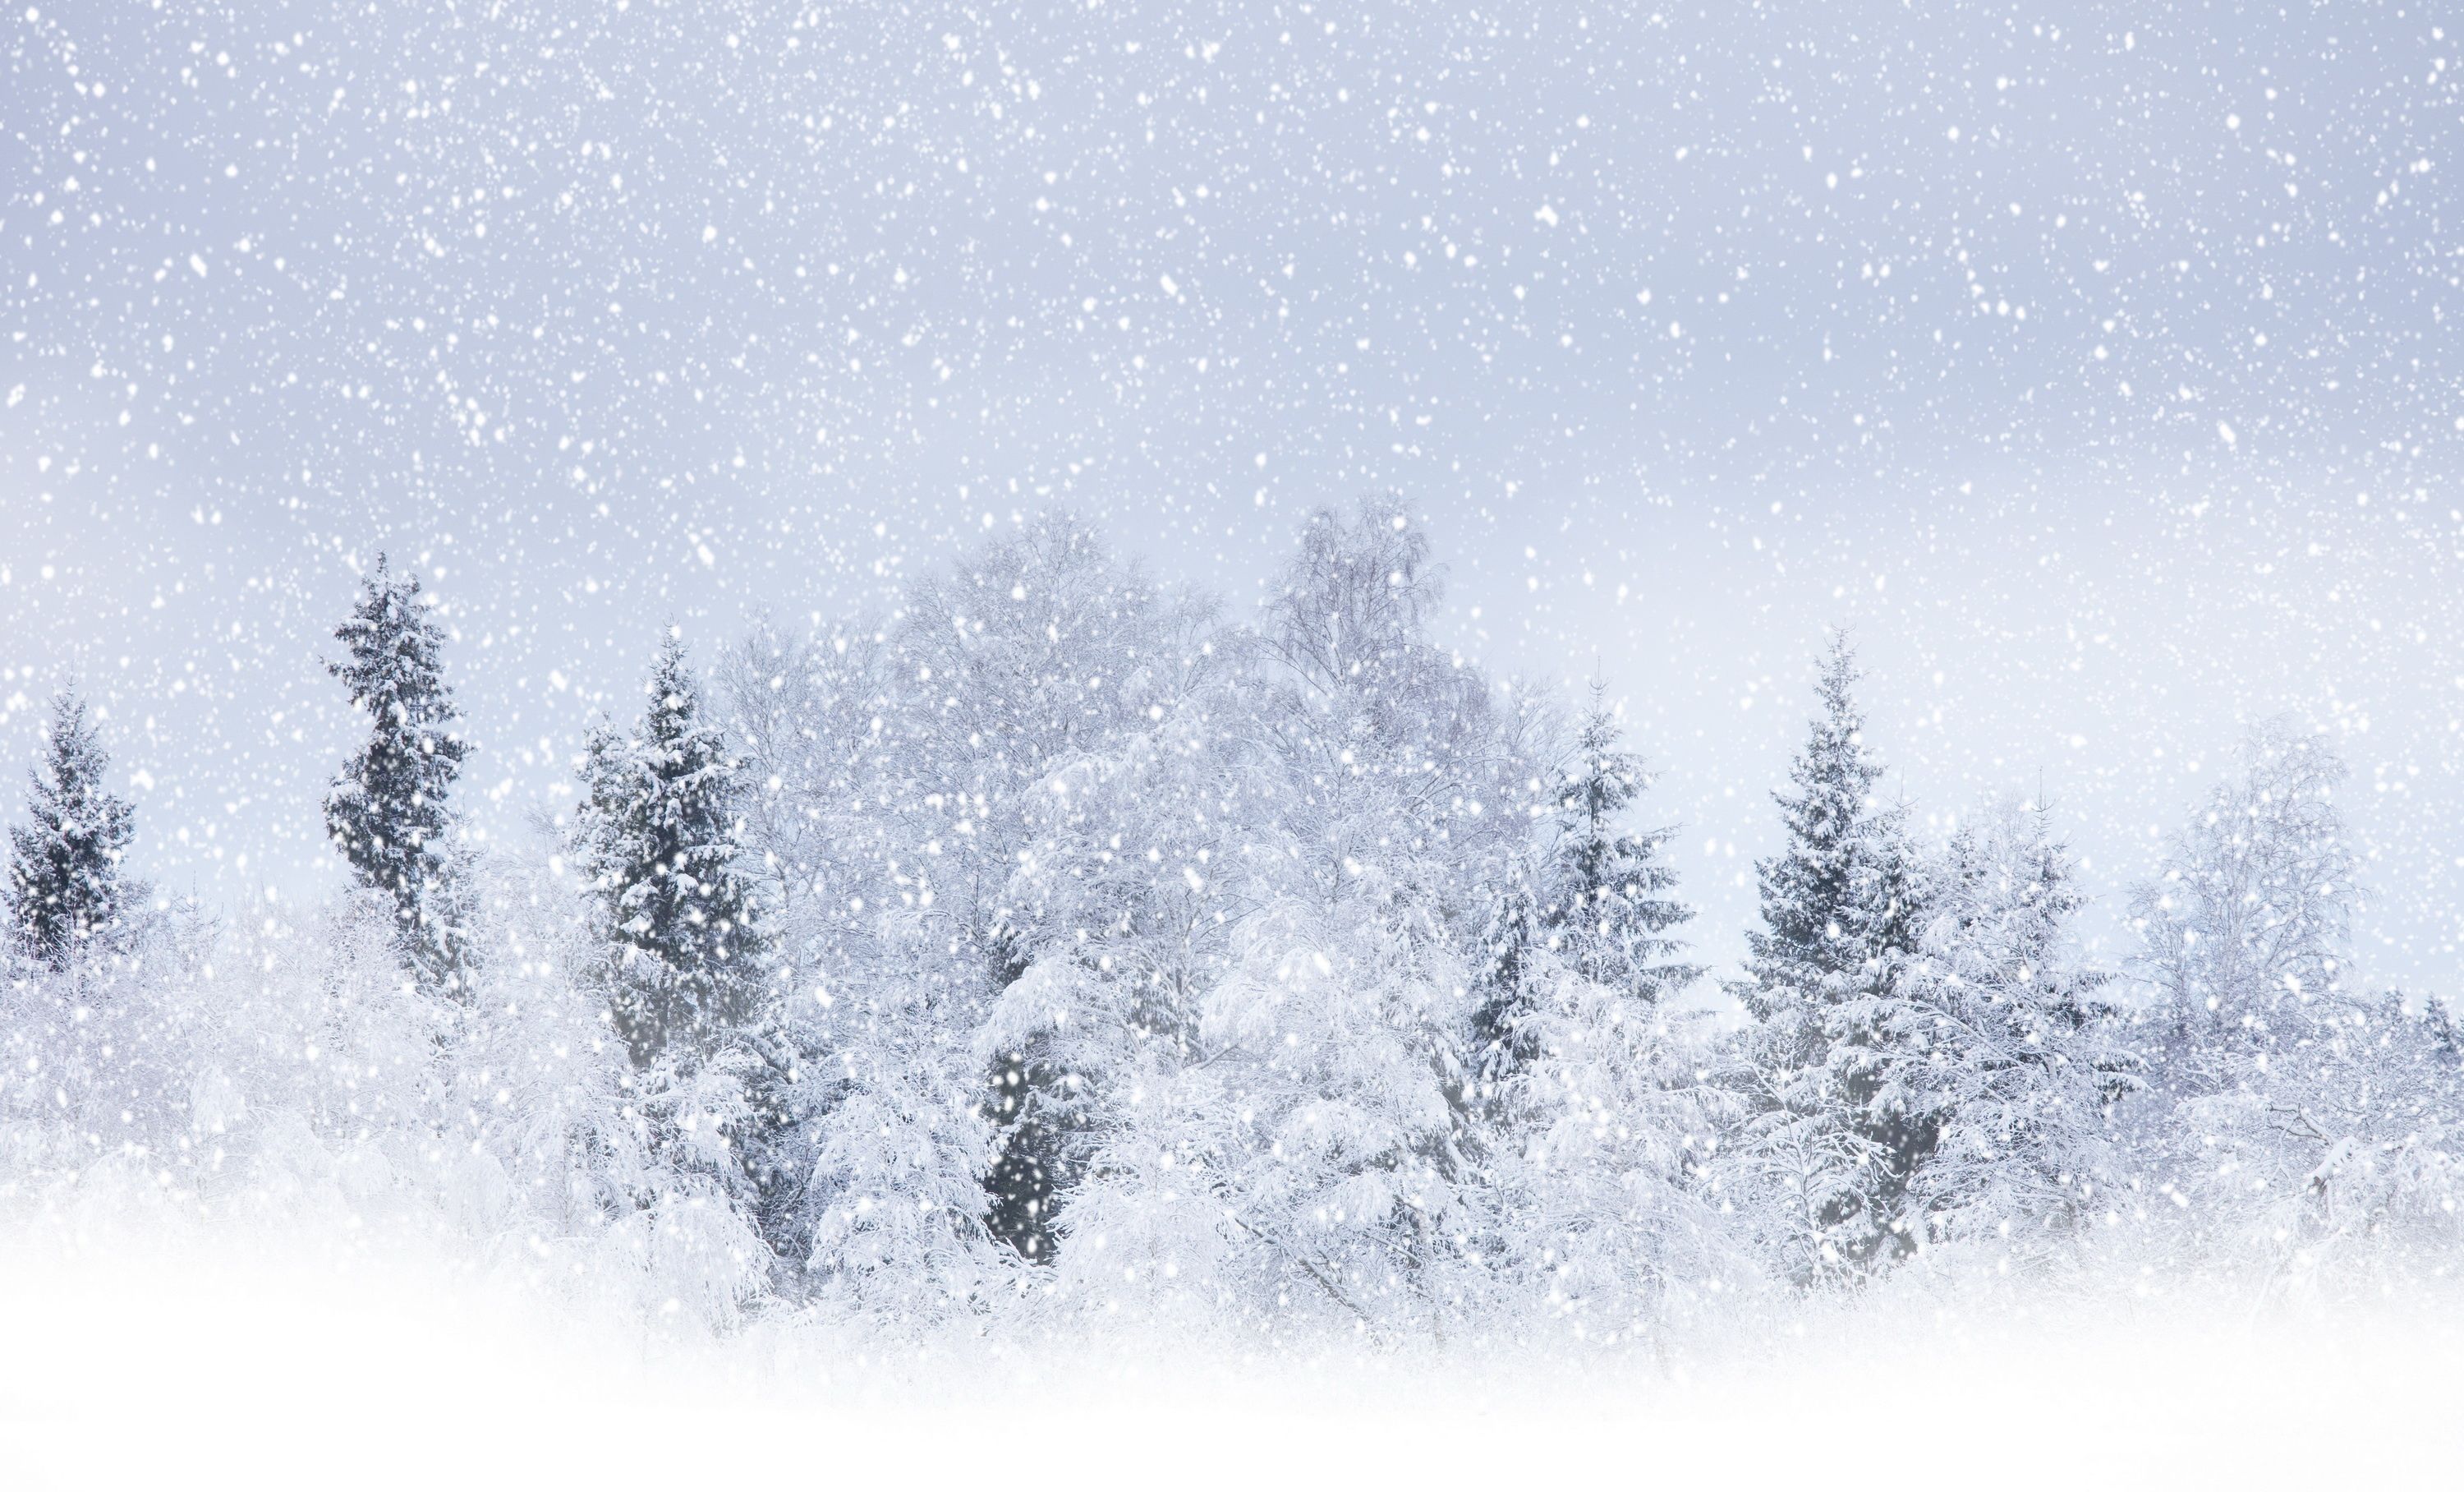 Blizzard Preparedness Blog. Snowfall wallpaper, Snow blizzard, Tree clip art